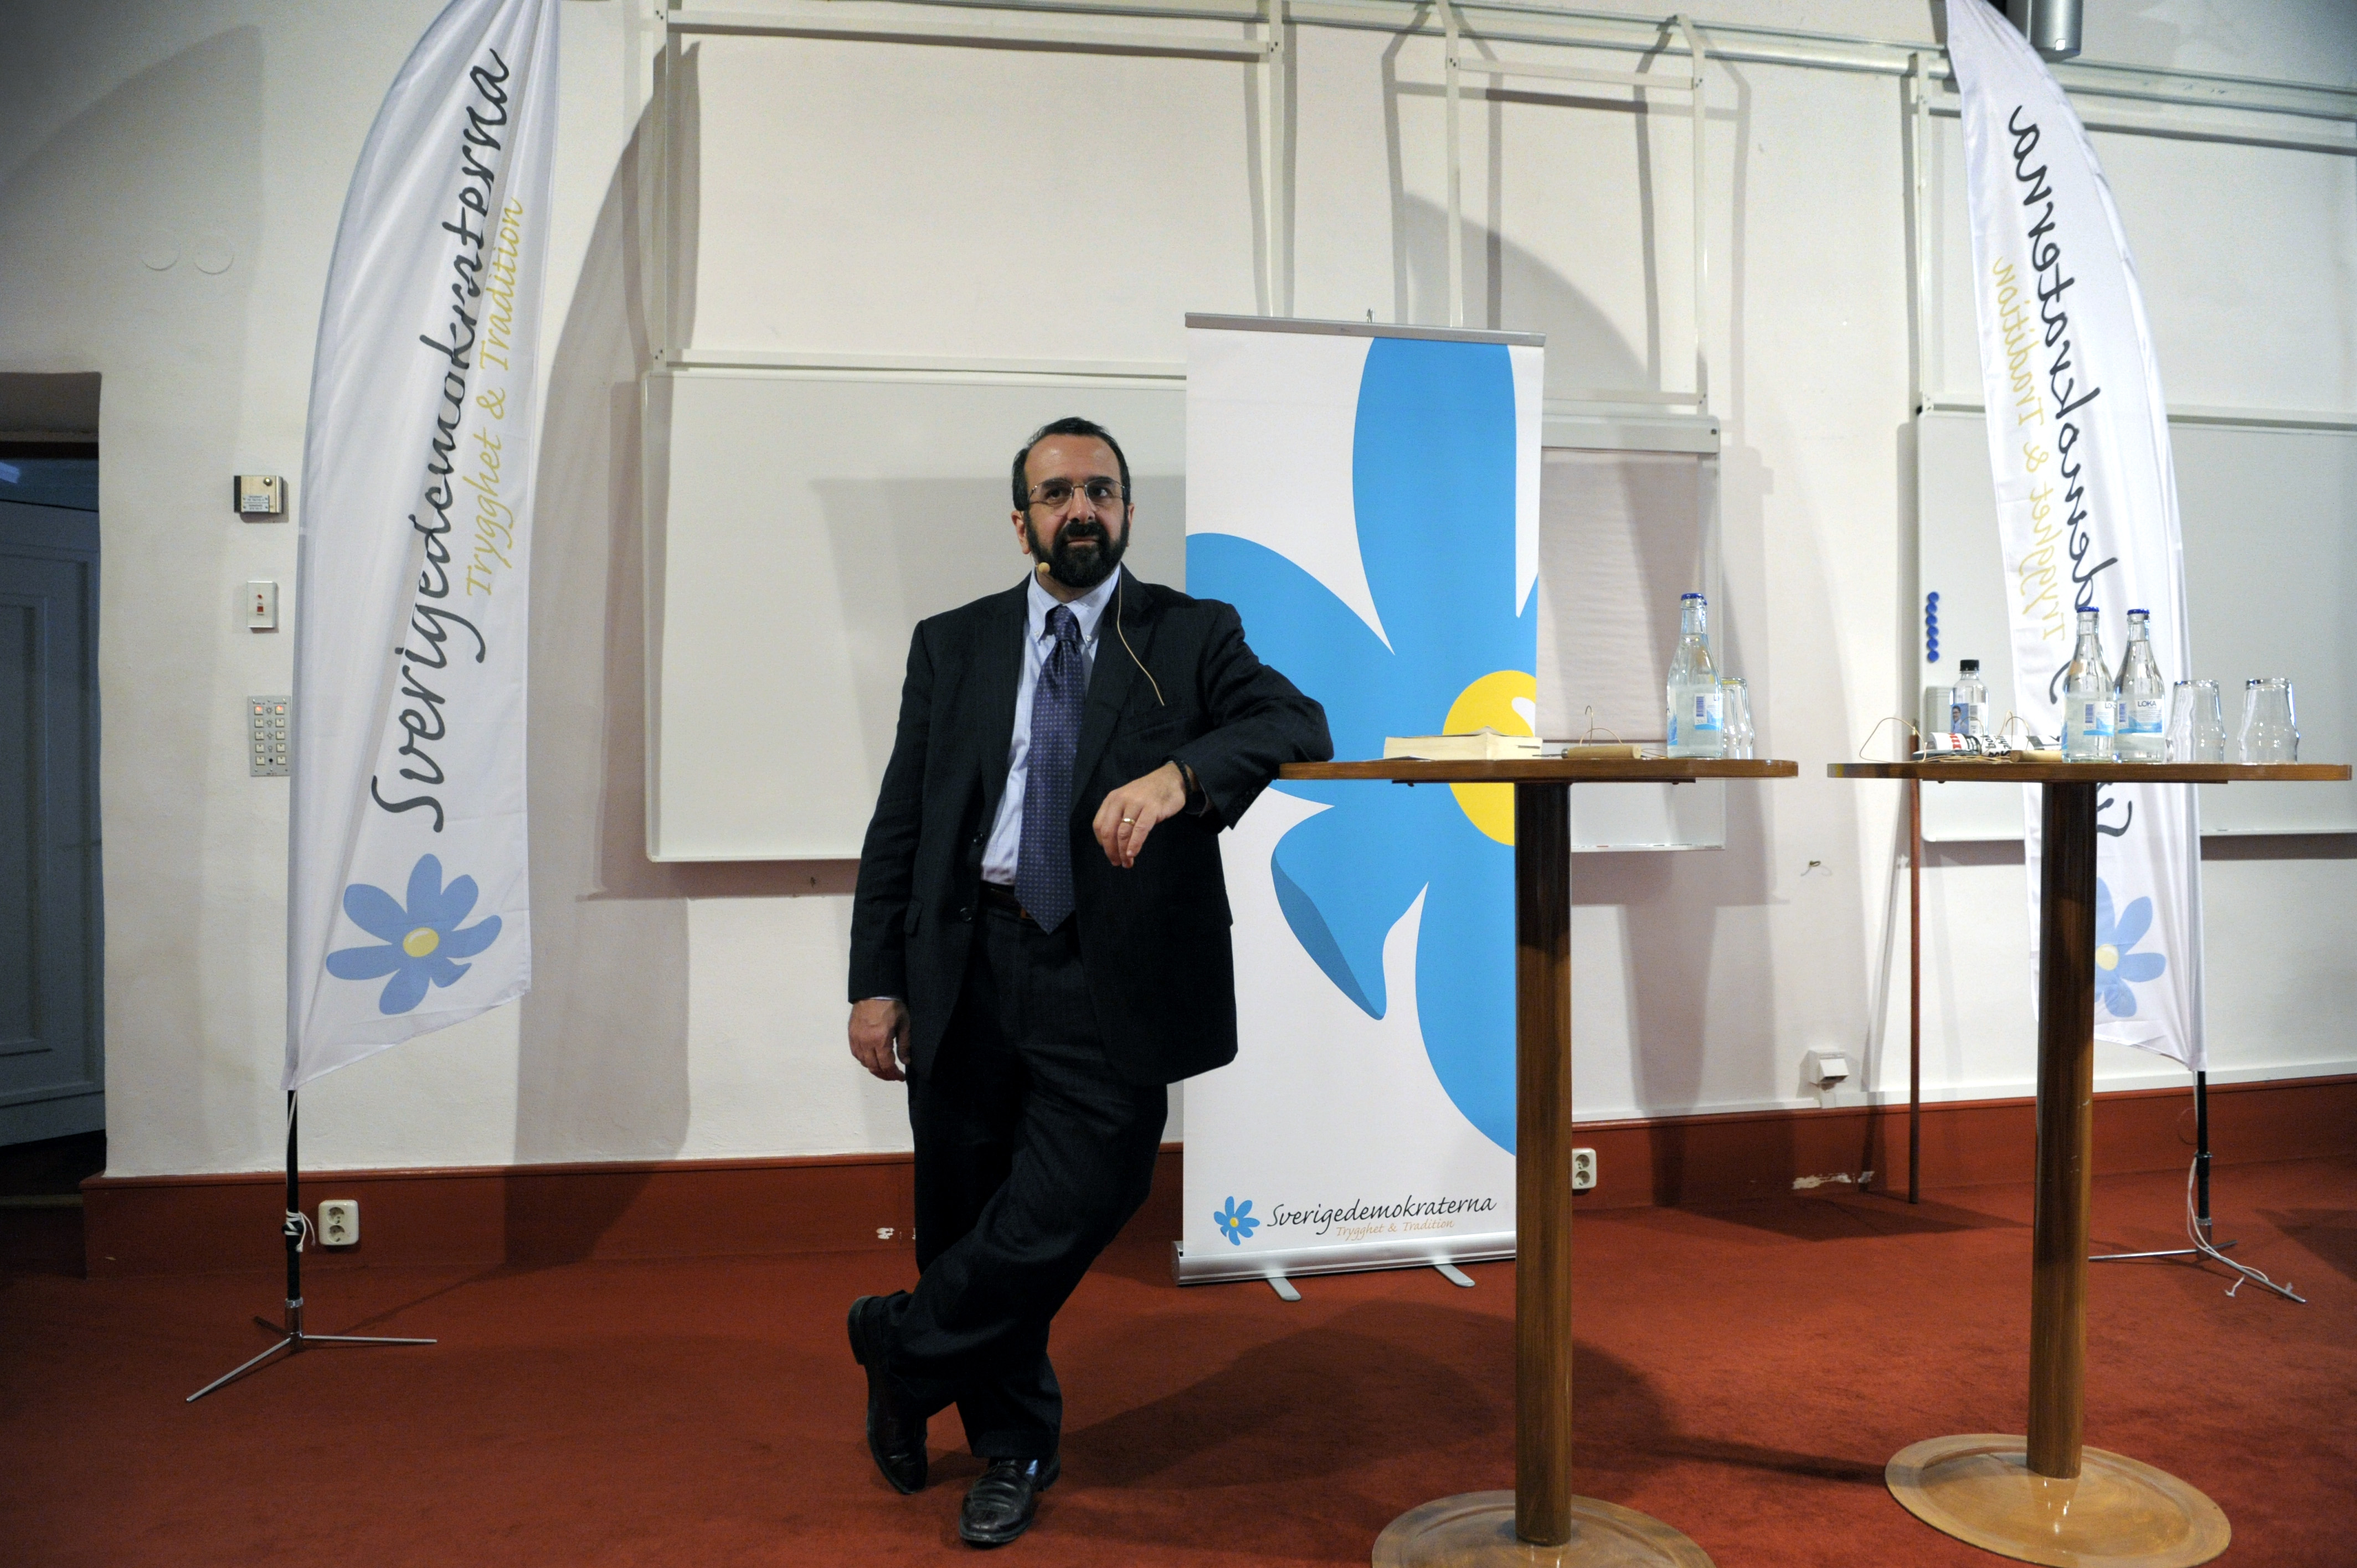 Sverigedemokraterna, Almedalen, Robert Spencer, Islam, Riksdagsvalet 2010